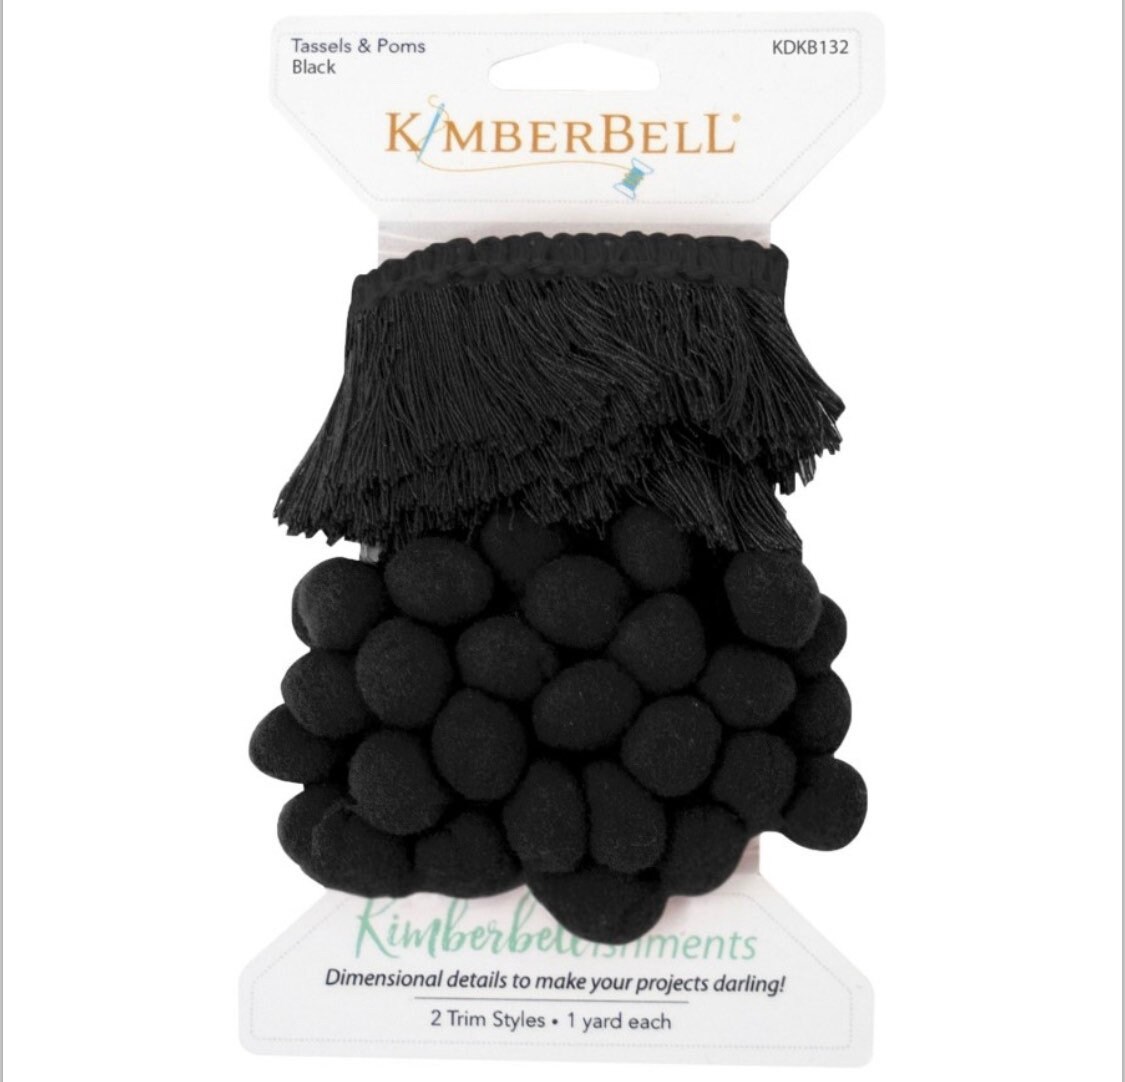 Black Yarn Destash, 2 Skeins, Bulky Faux Fur Pom, Acrylic Vegan Knitting  Crochet Yarn, Clearance Sale 